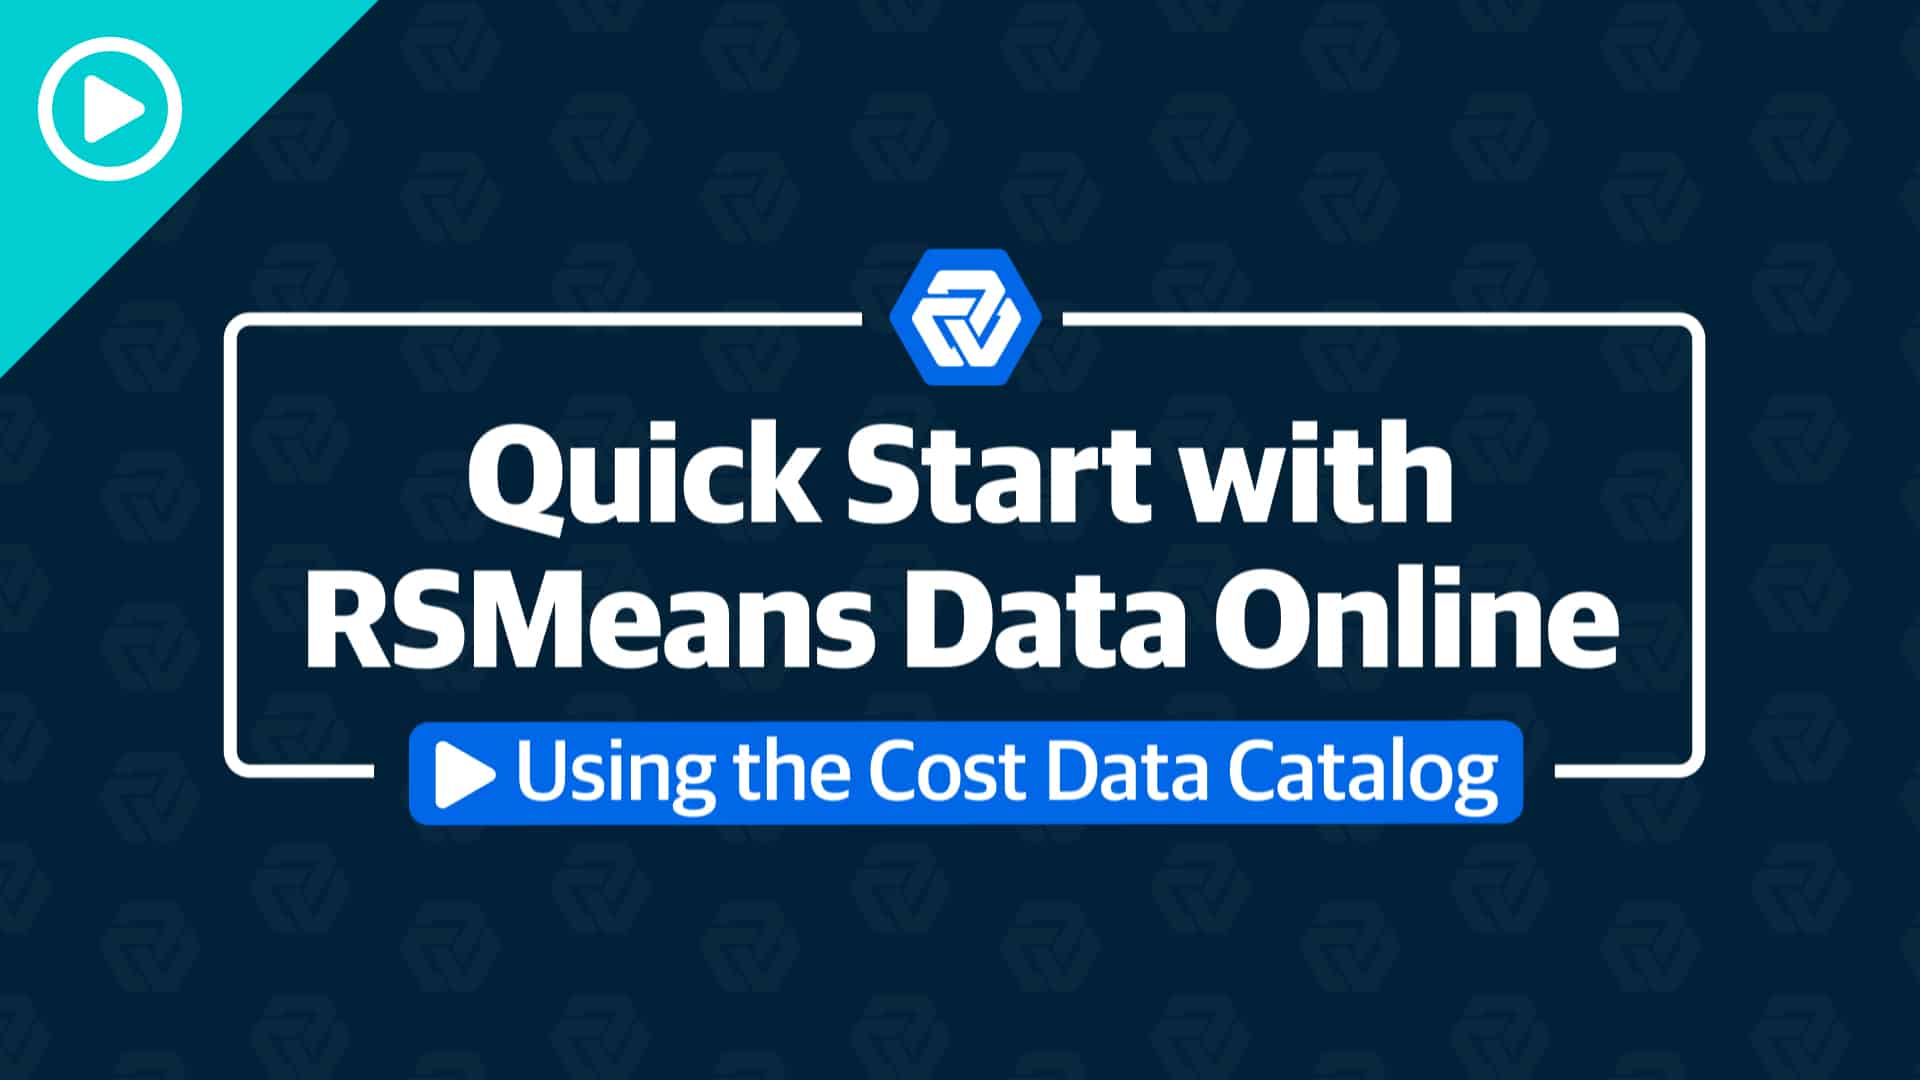 Using the Cost Data Catalog